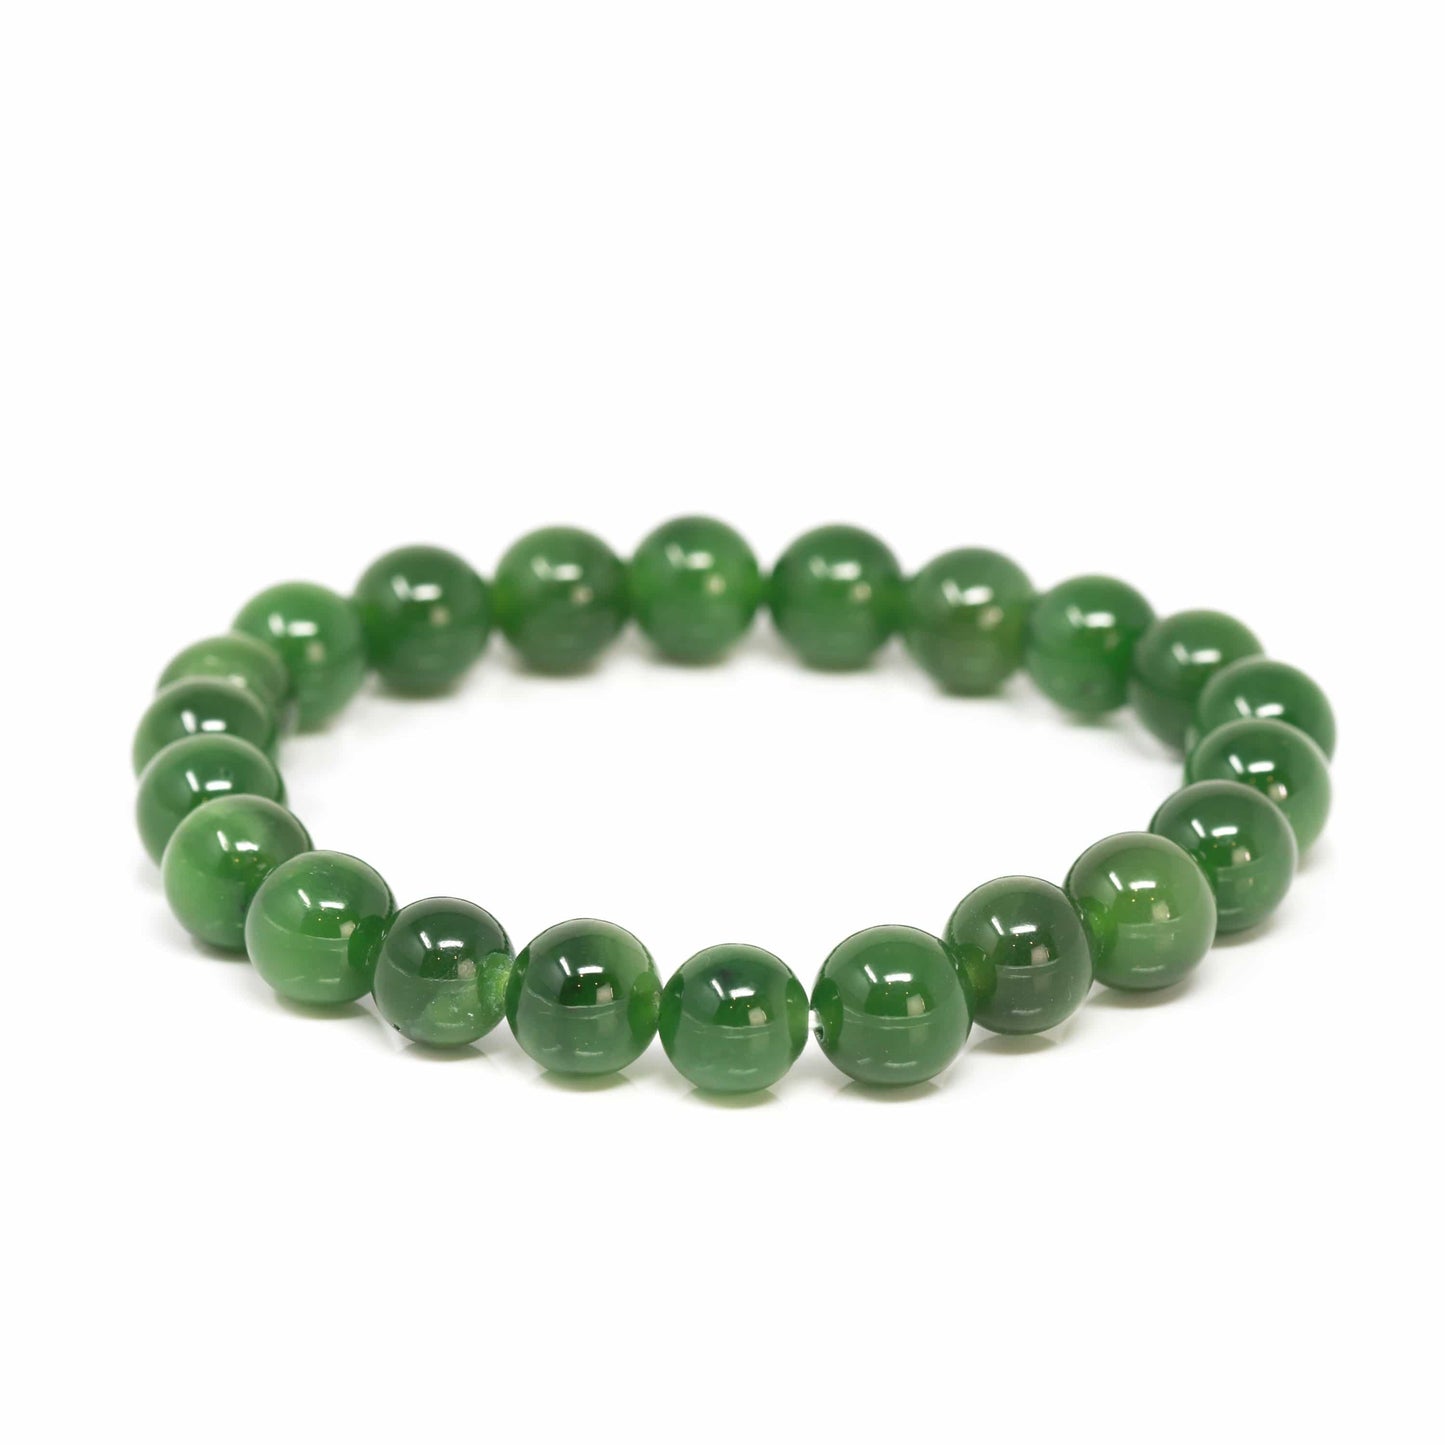 RealJade "Classic Bangle" Genuine Burmese High Quality Apple Green Jadeite Jade Bangle Bracelet (53.4mm) #539